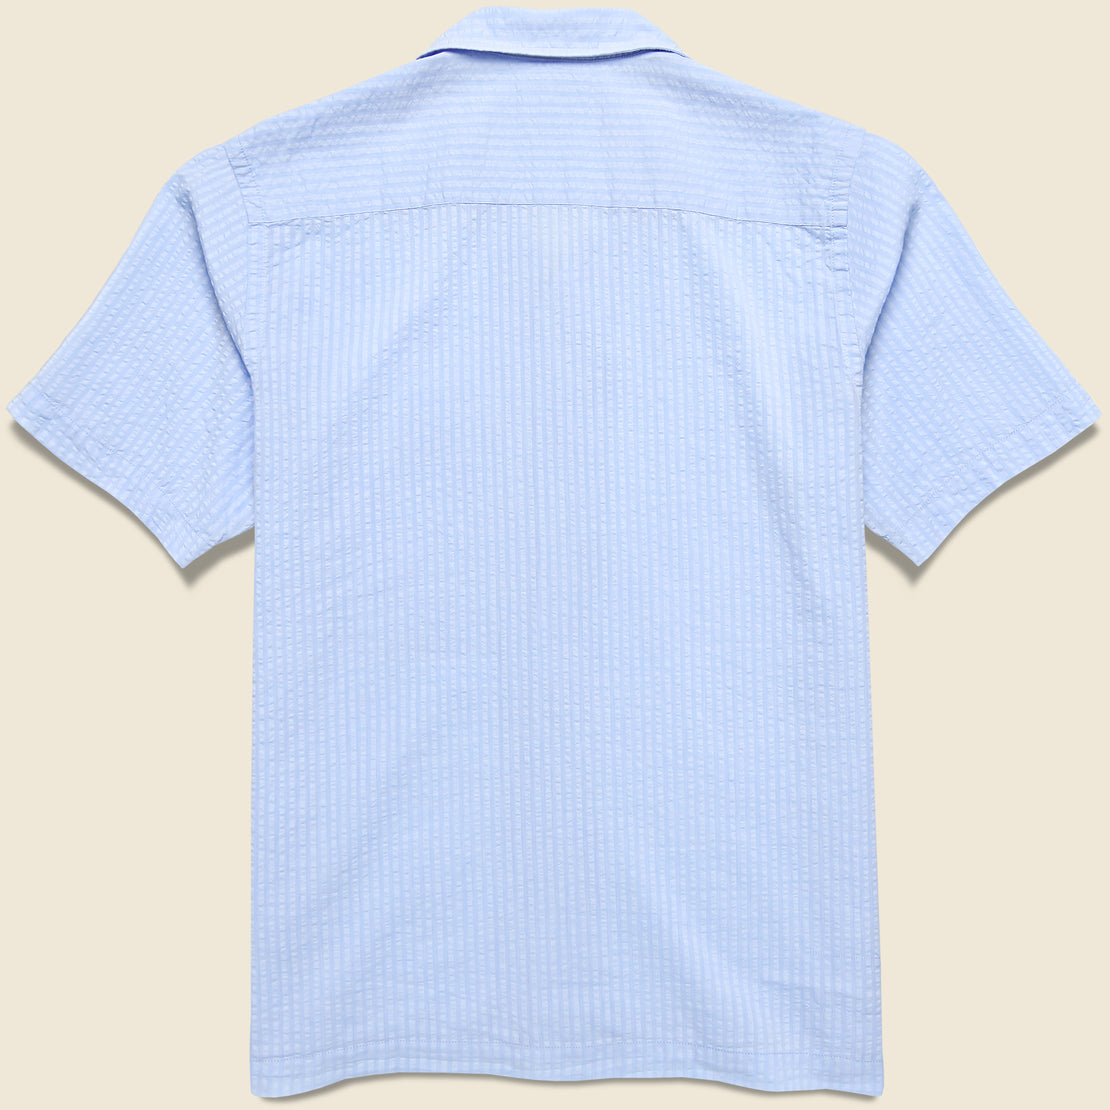 Onda Seersucker Camp Shirt - Pale Blue - Universal Works - STAG Provisions - Tops - S/S Woven - Seersucker